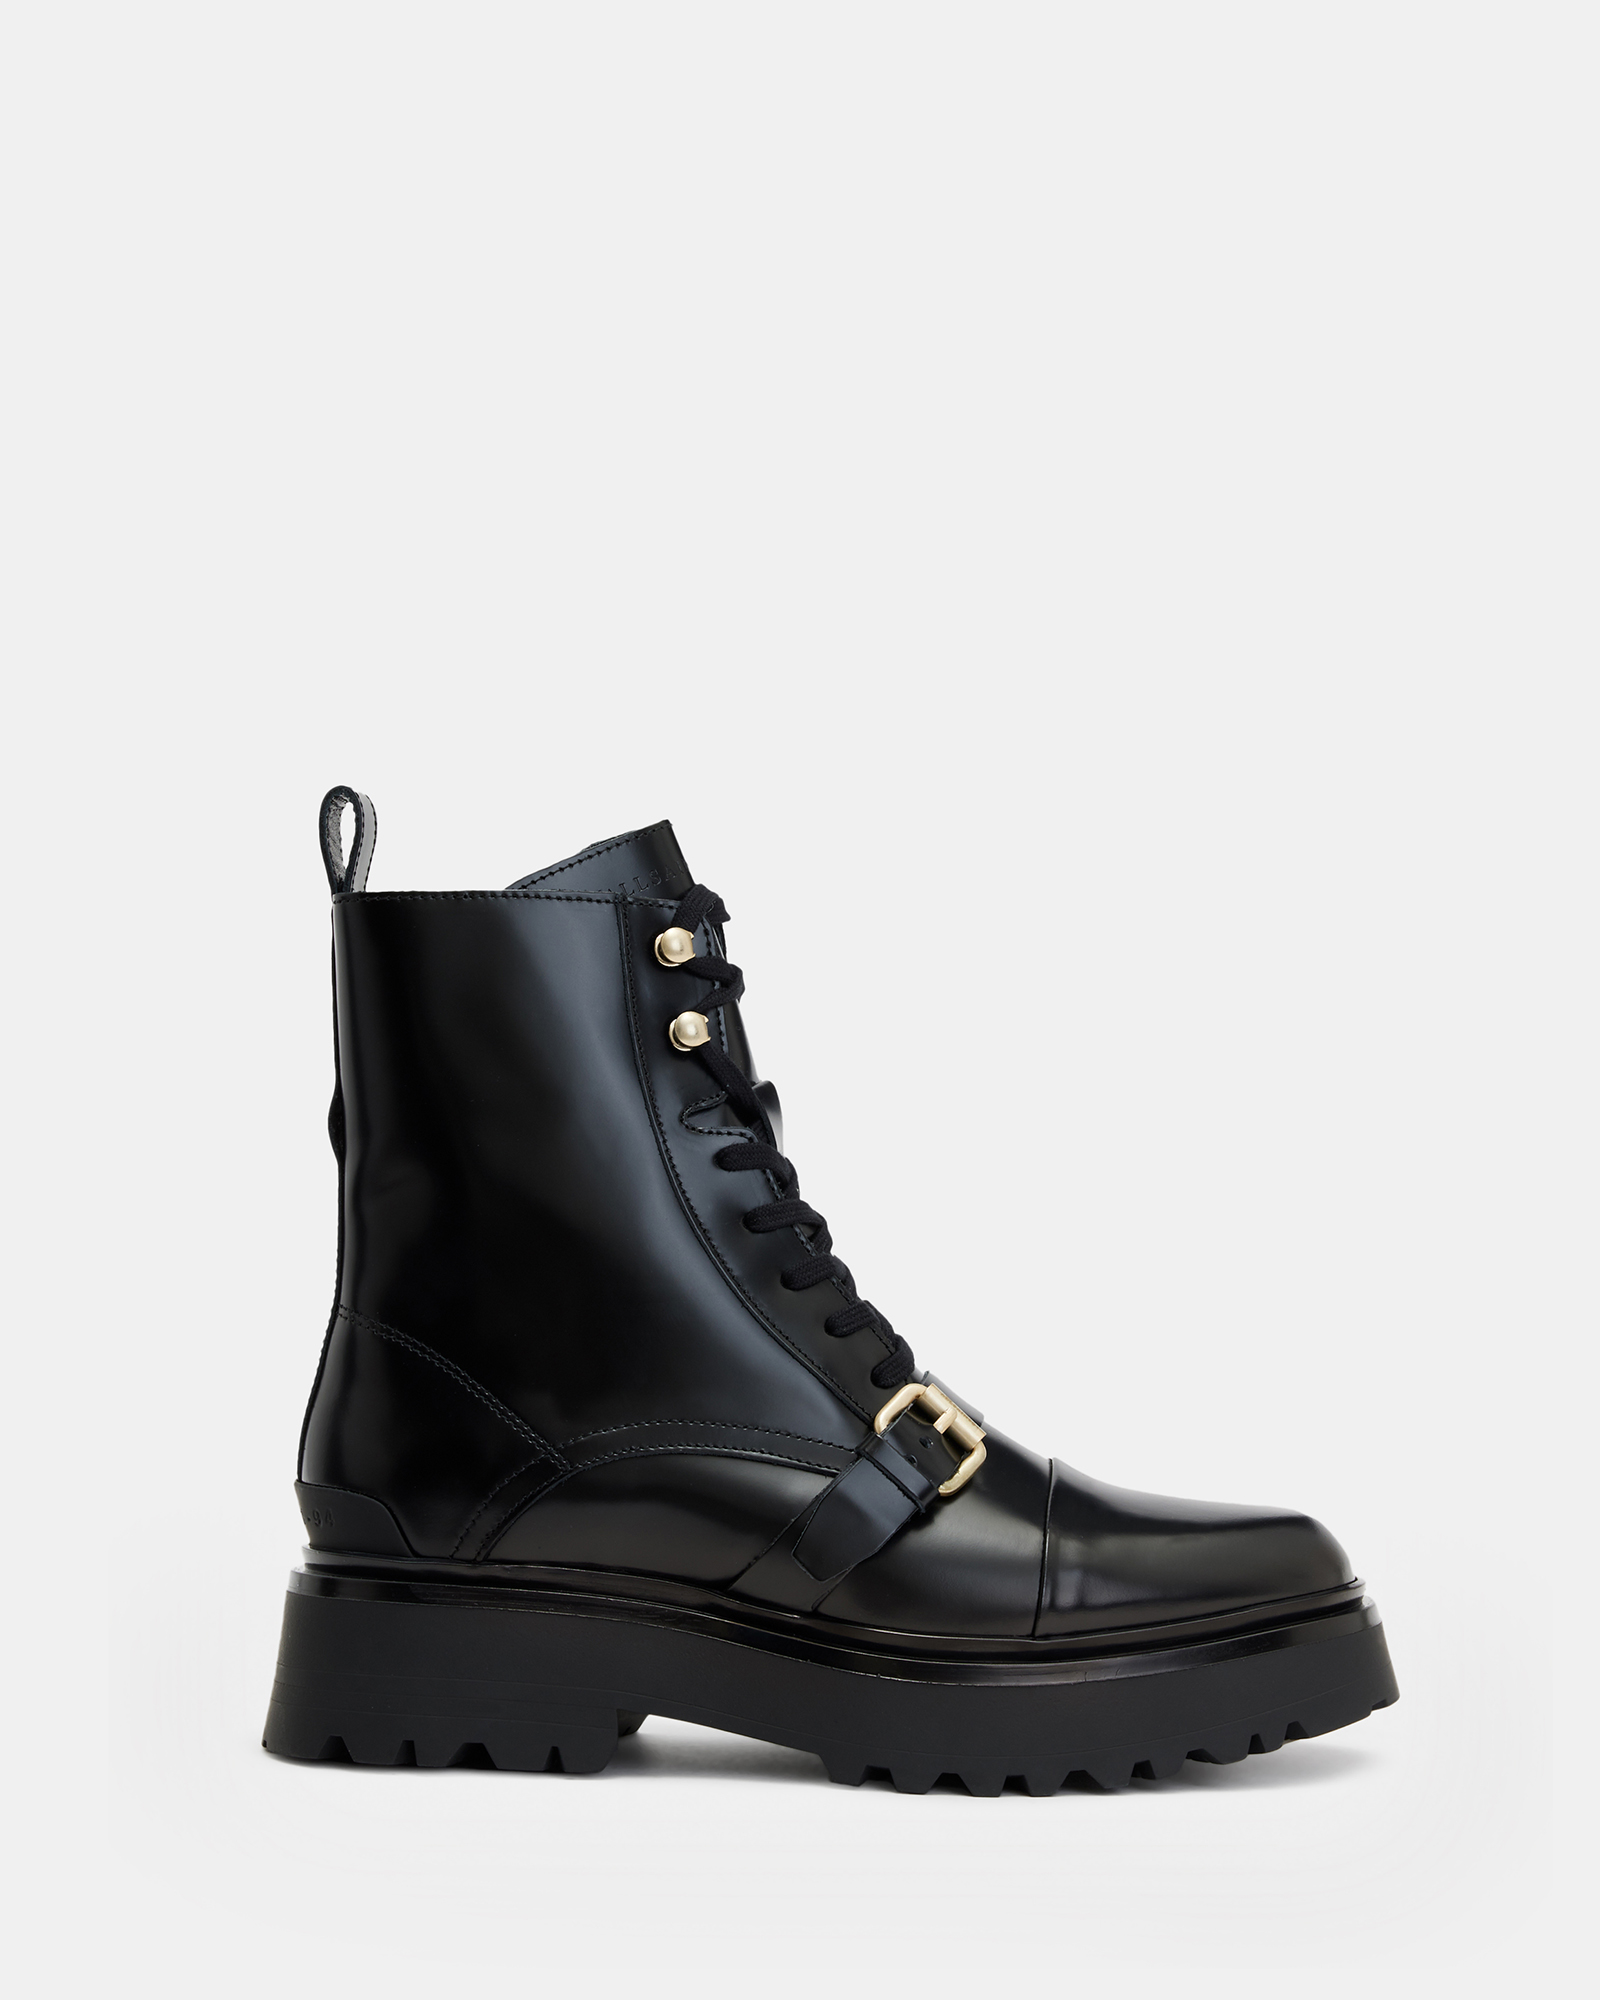 AllSaints Stellar Leather Boots,, BLACK/WARM BRASS